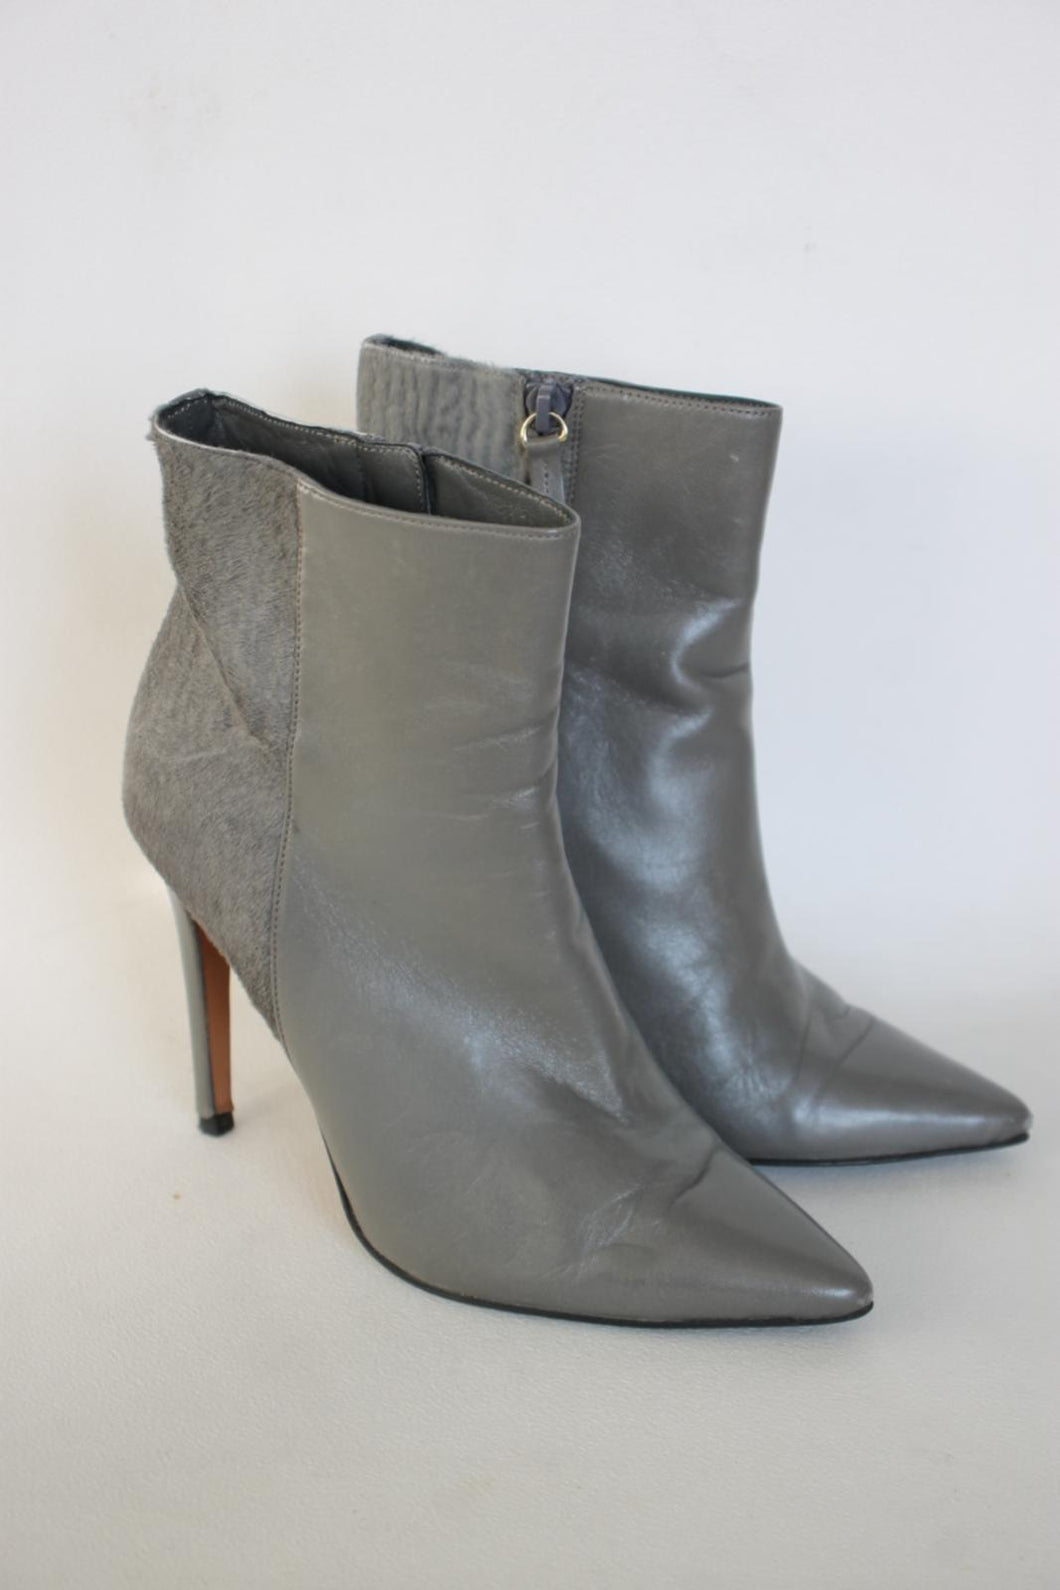 L.K. BENNETT Ladies Grey Leather/Hide Stiletto Heel Pointed Ankle Boots UK5 EU38